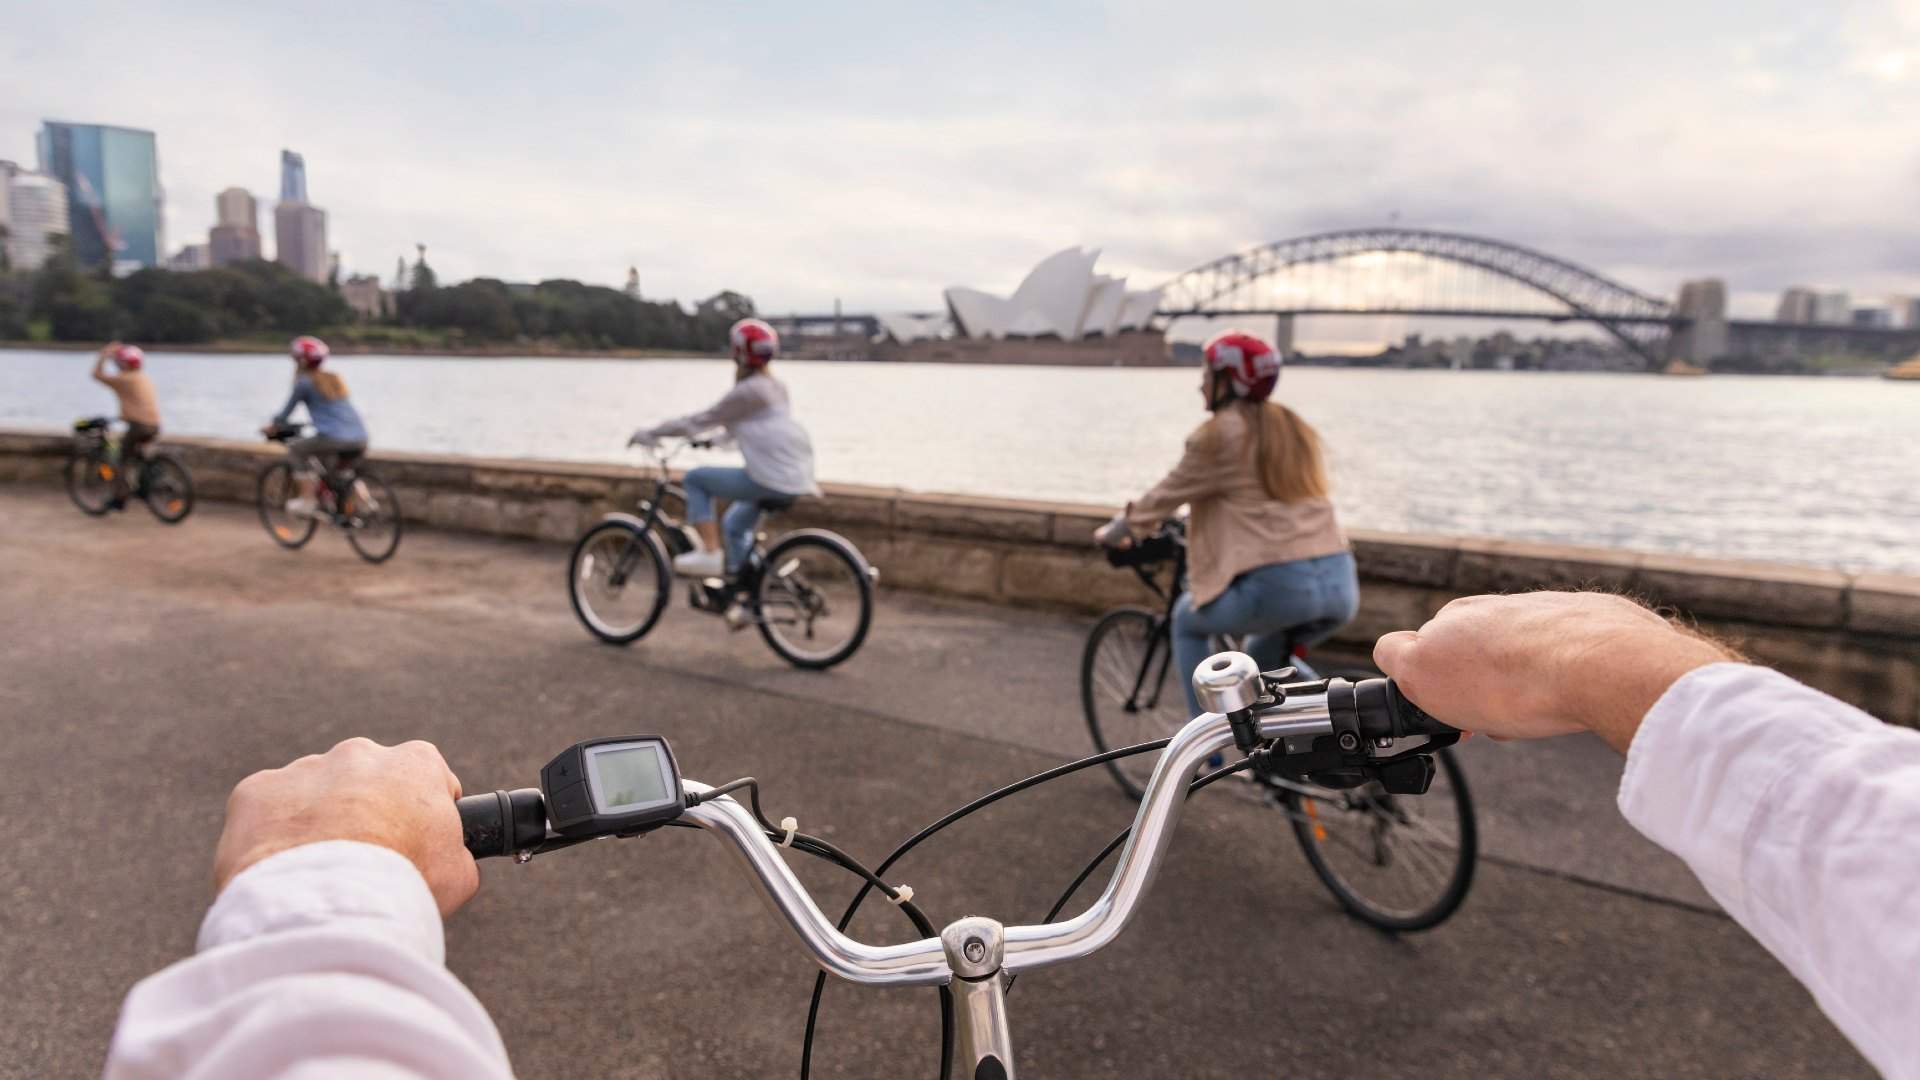 Family enjoying a ride through the Royal Botanic Garden Sydney on their hired bicycles from Bonza Bike Tours